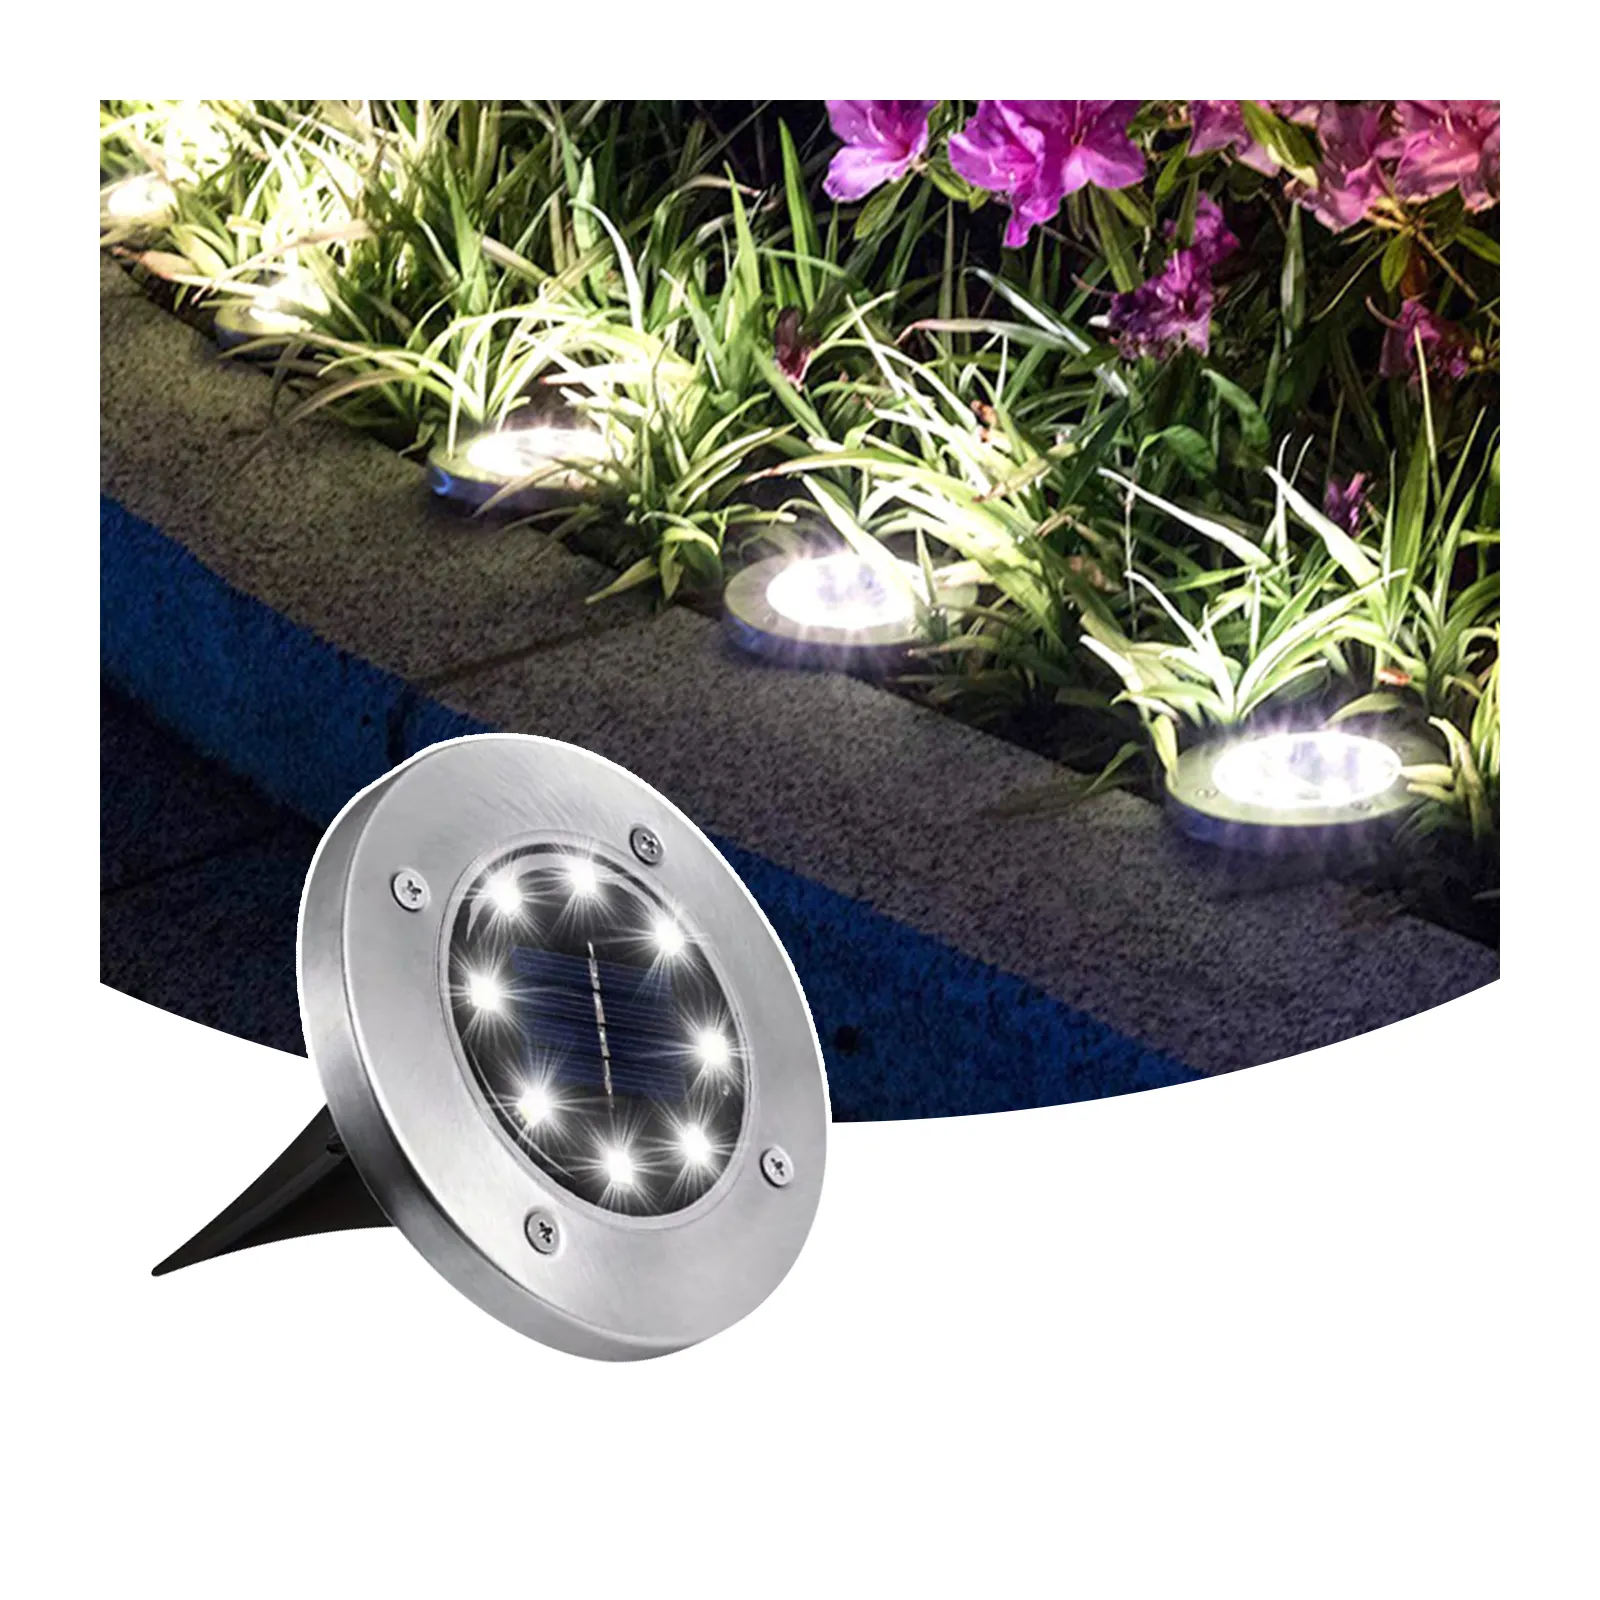 Orlite Solar Ground RGB Light 4 Packs 8LED Luz solar para jardín Exterior Impermeable para césped Patio